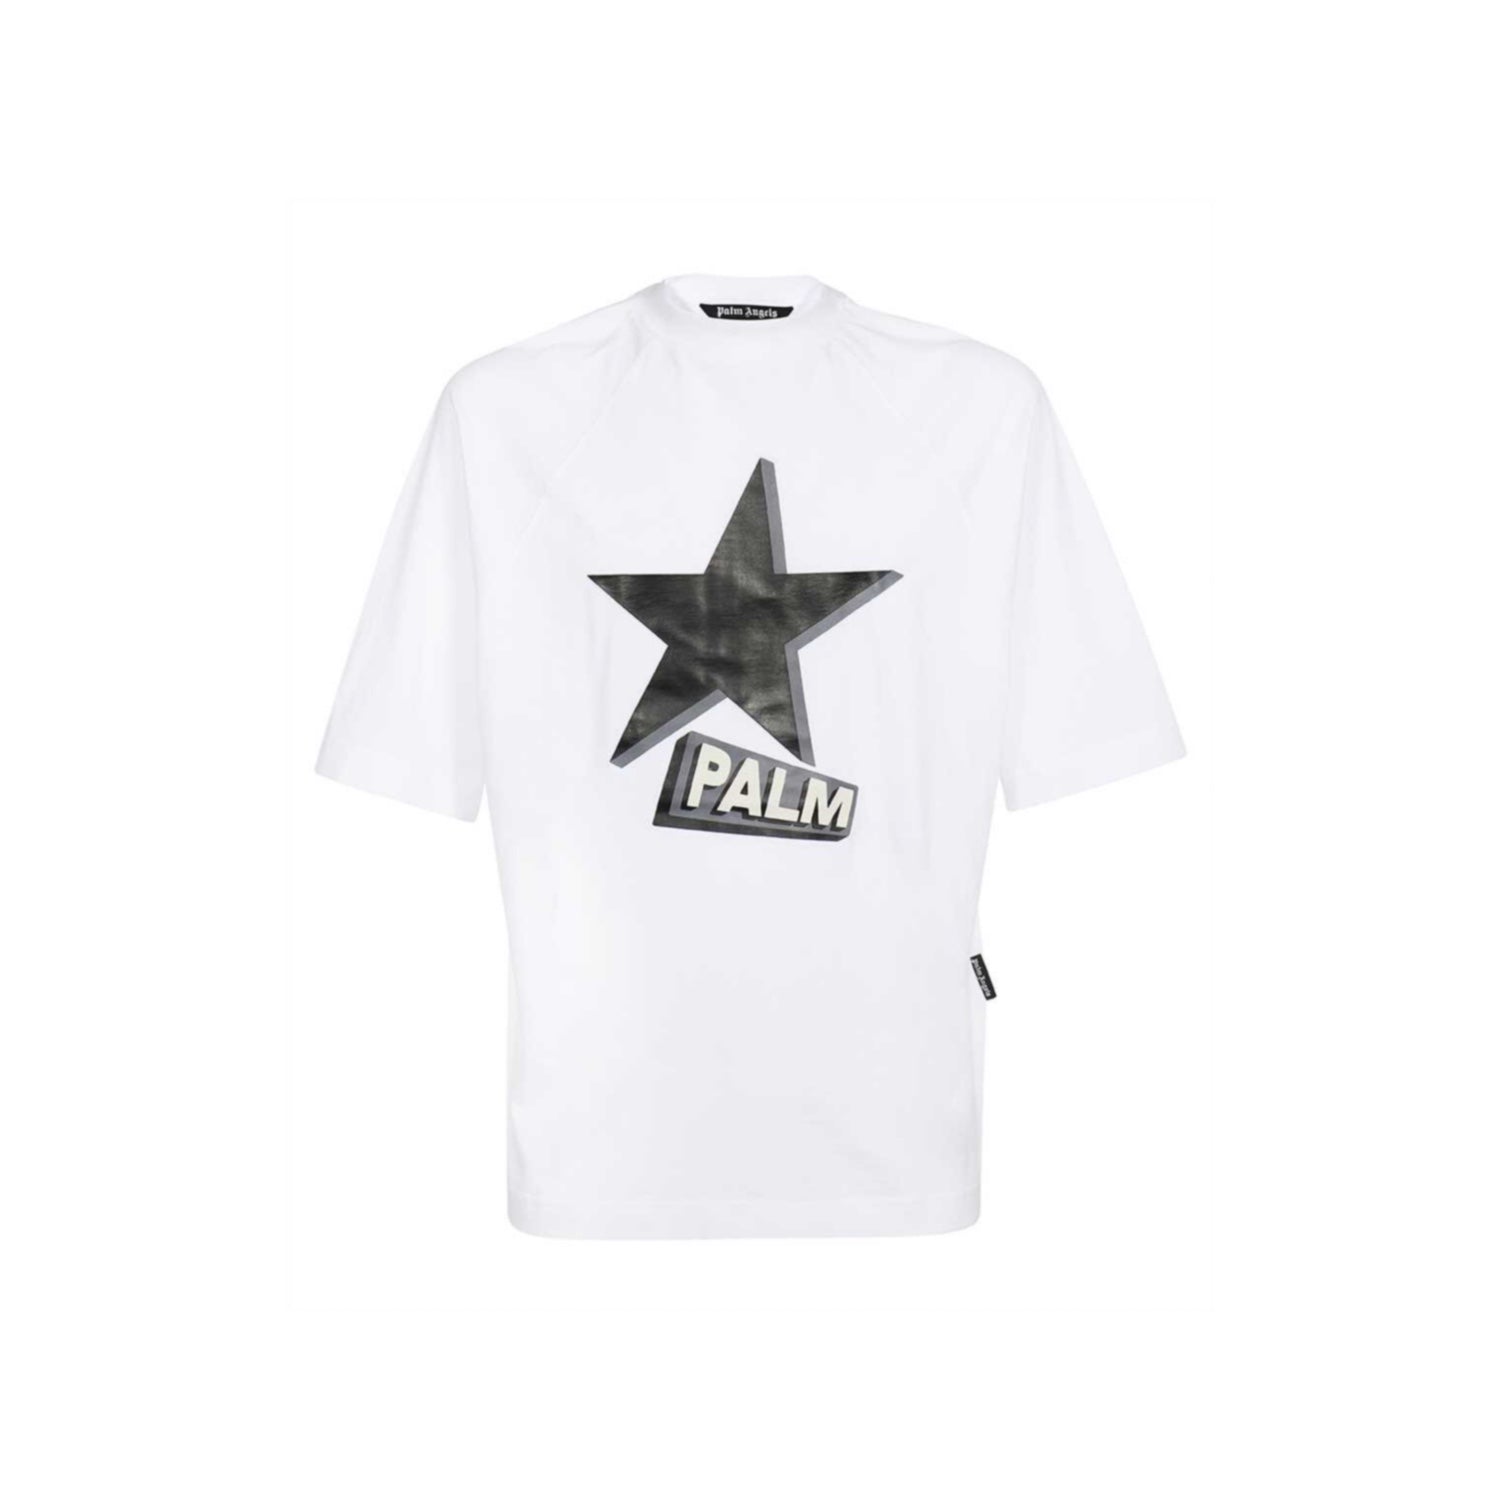 Palm Angels Rockstar T-Shirt